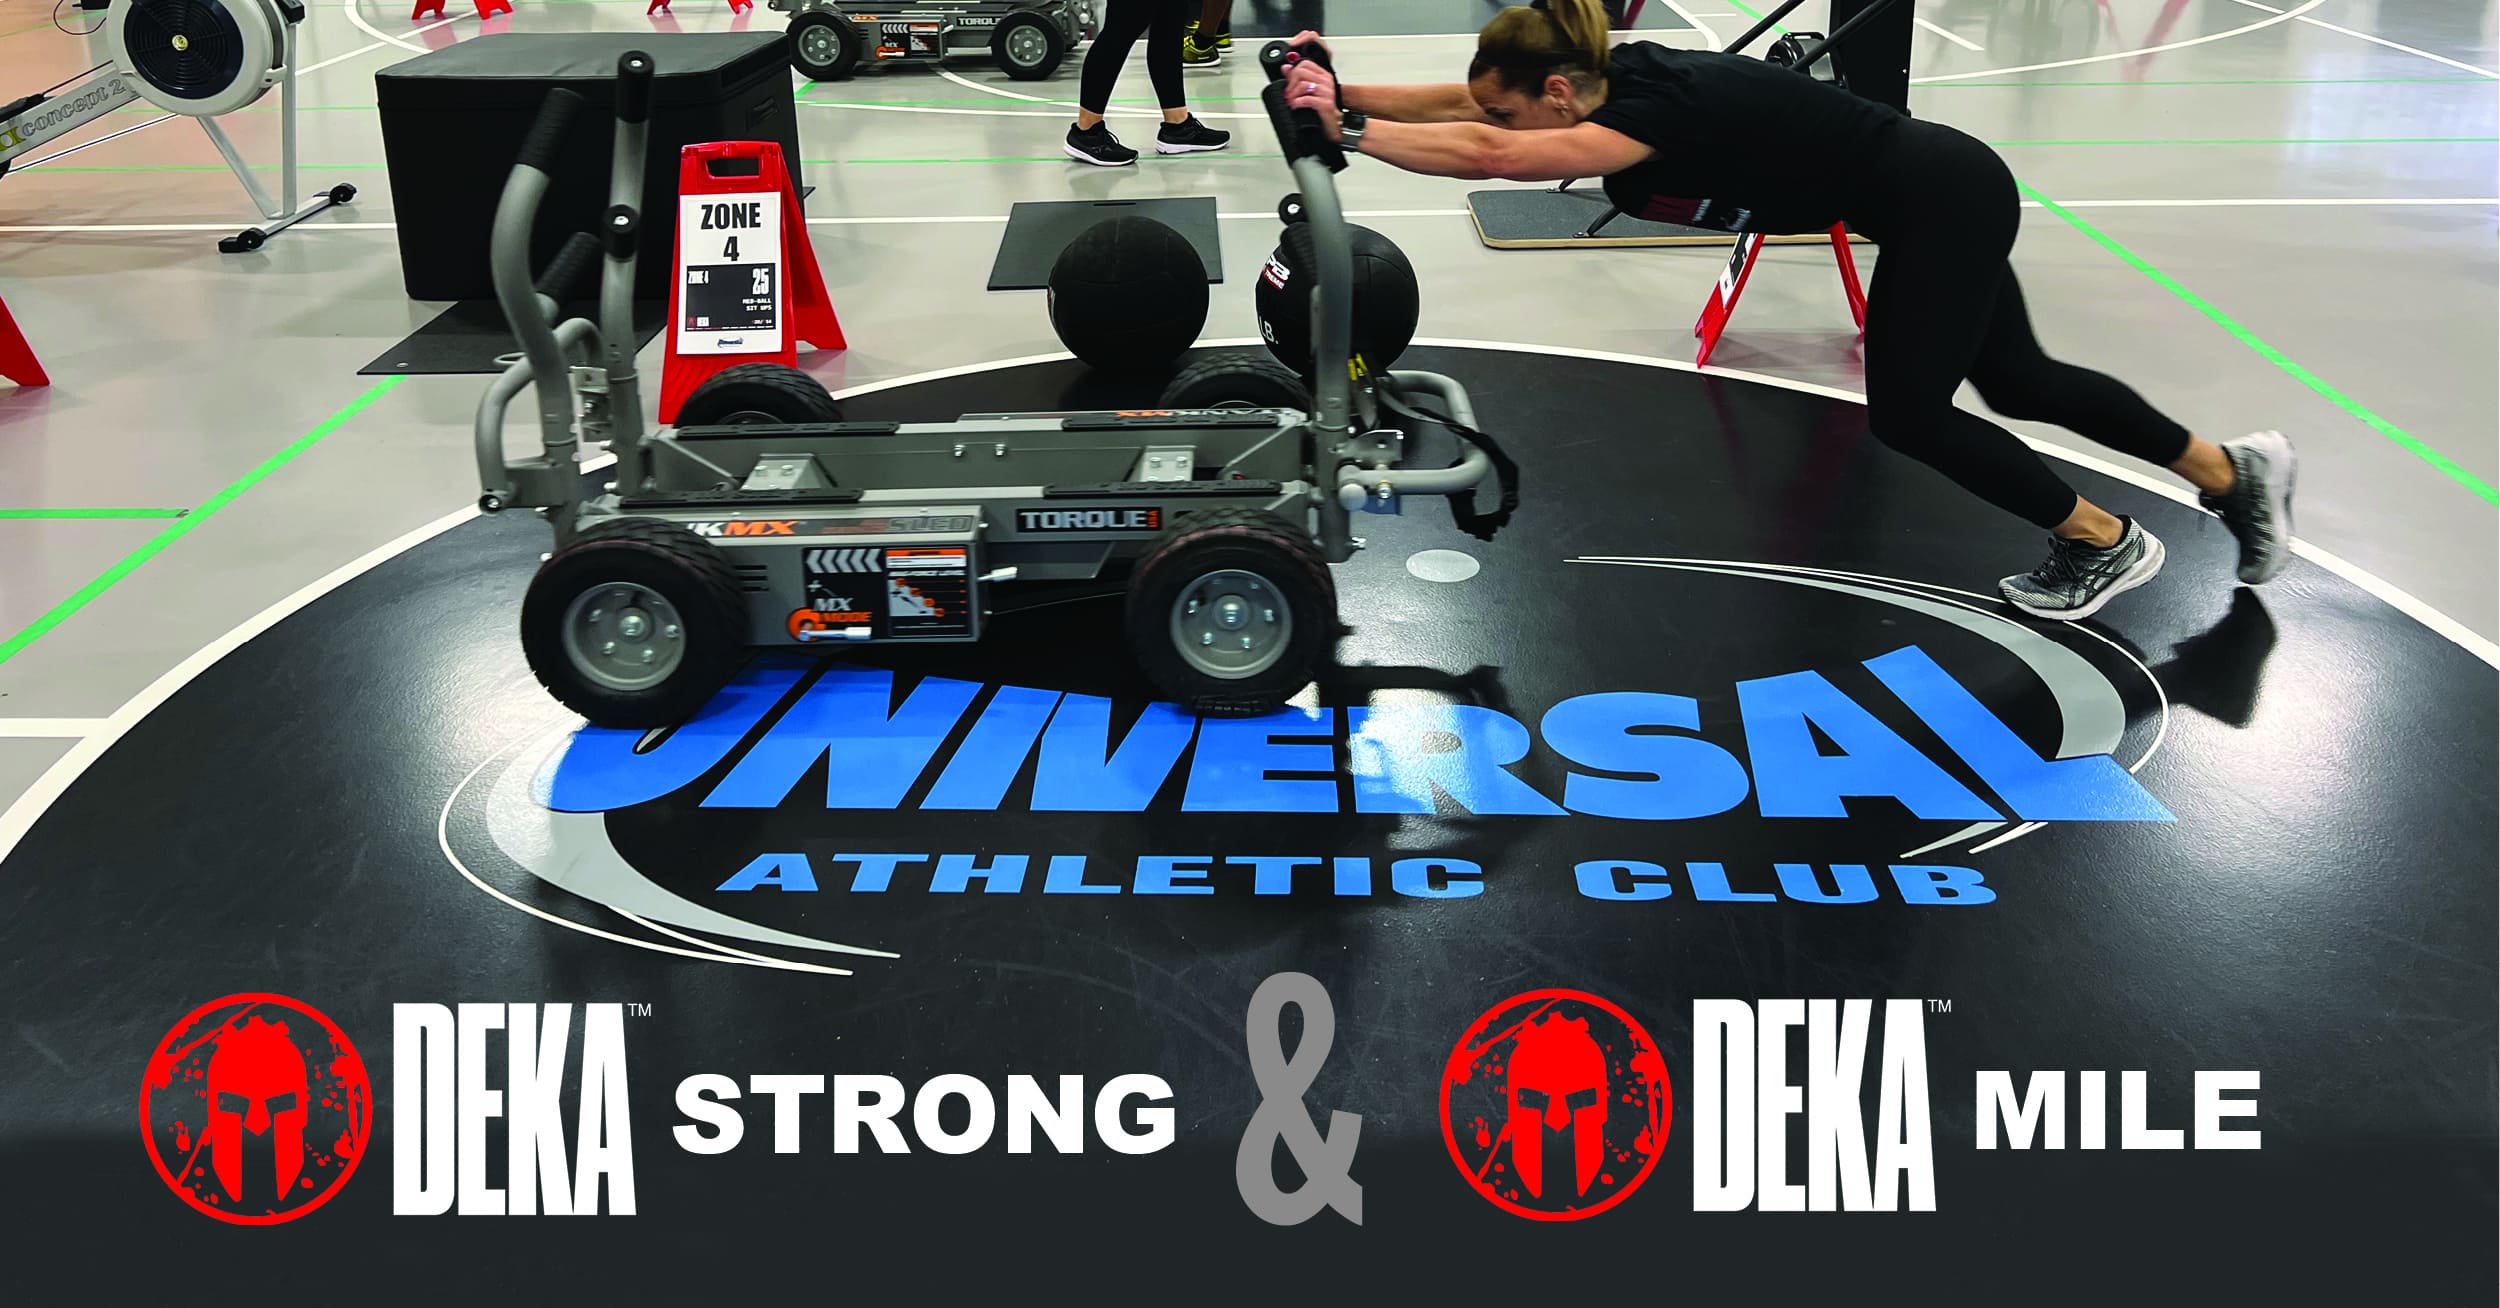 DEKA Strong & DEKA Mile Universal Athletic Club